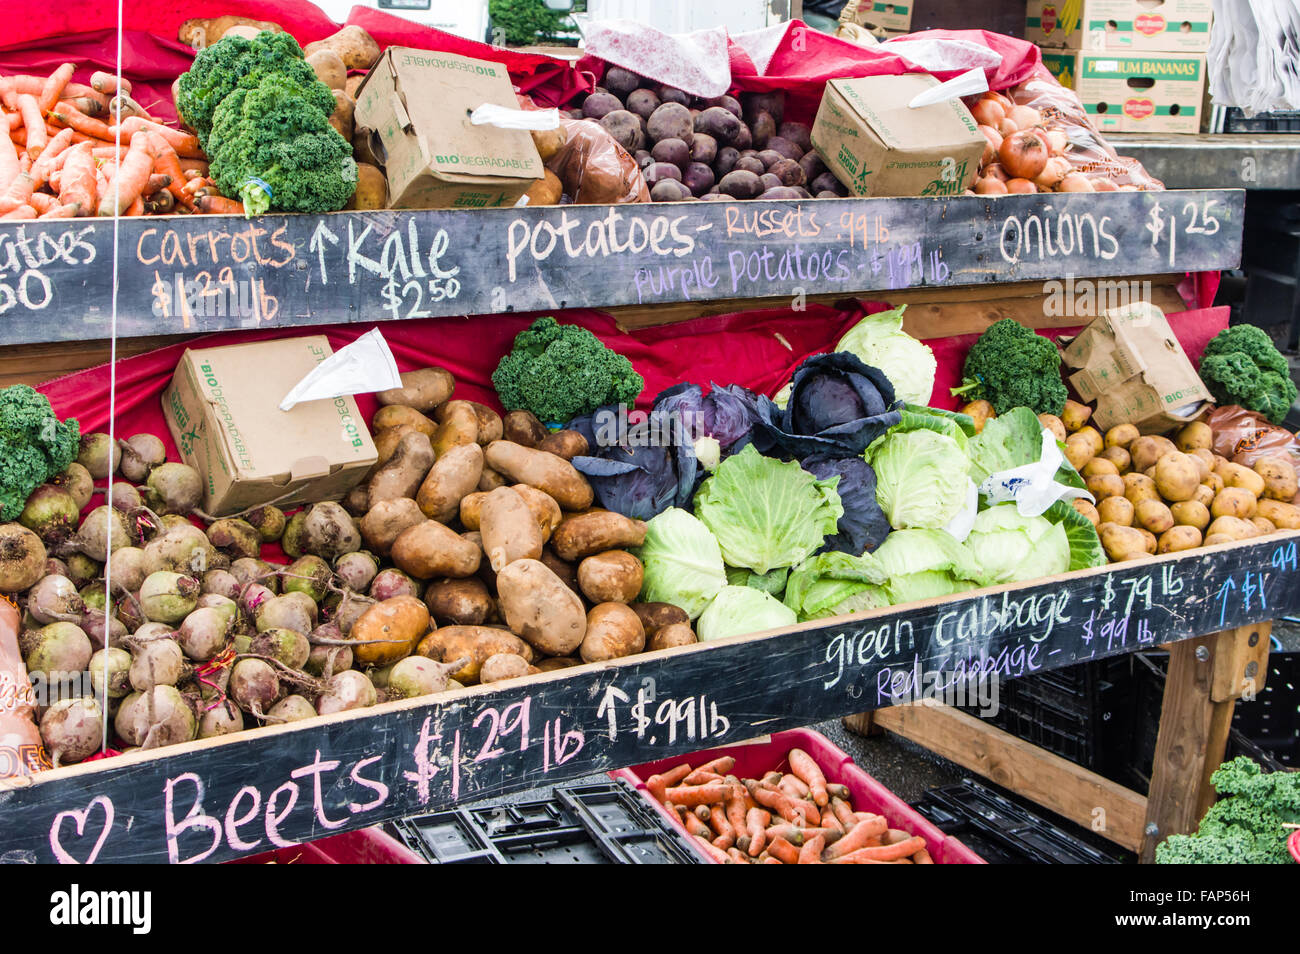 Market display of fresh produce including potatoes, beets and carrots at the farmers market, Beaverton, Oregon, USA Stock Photo